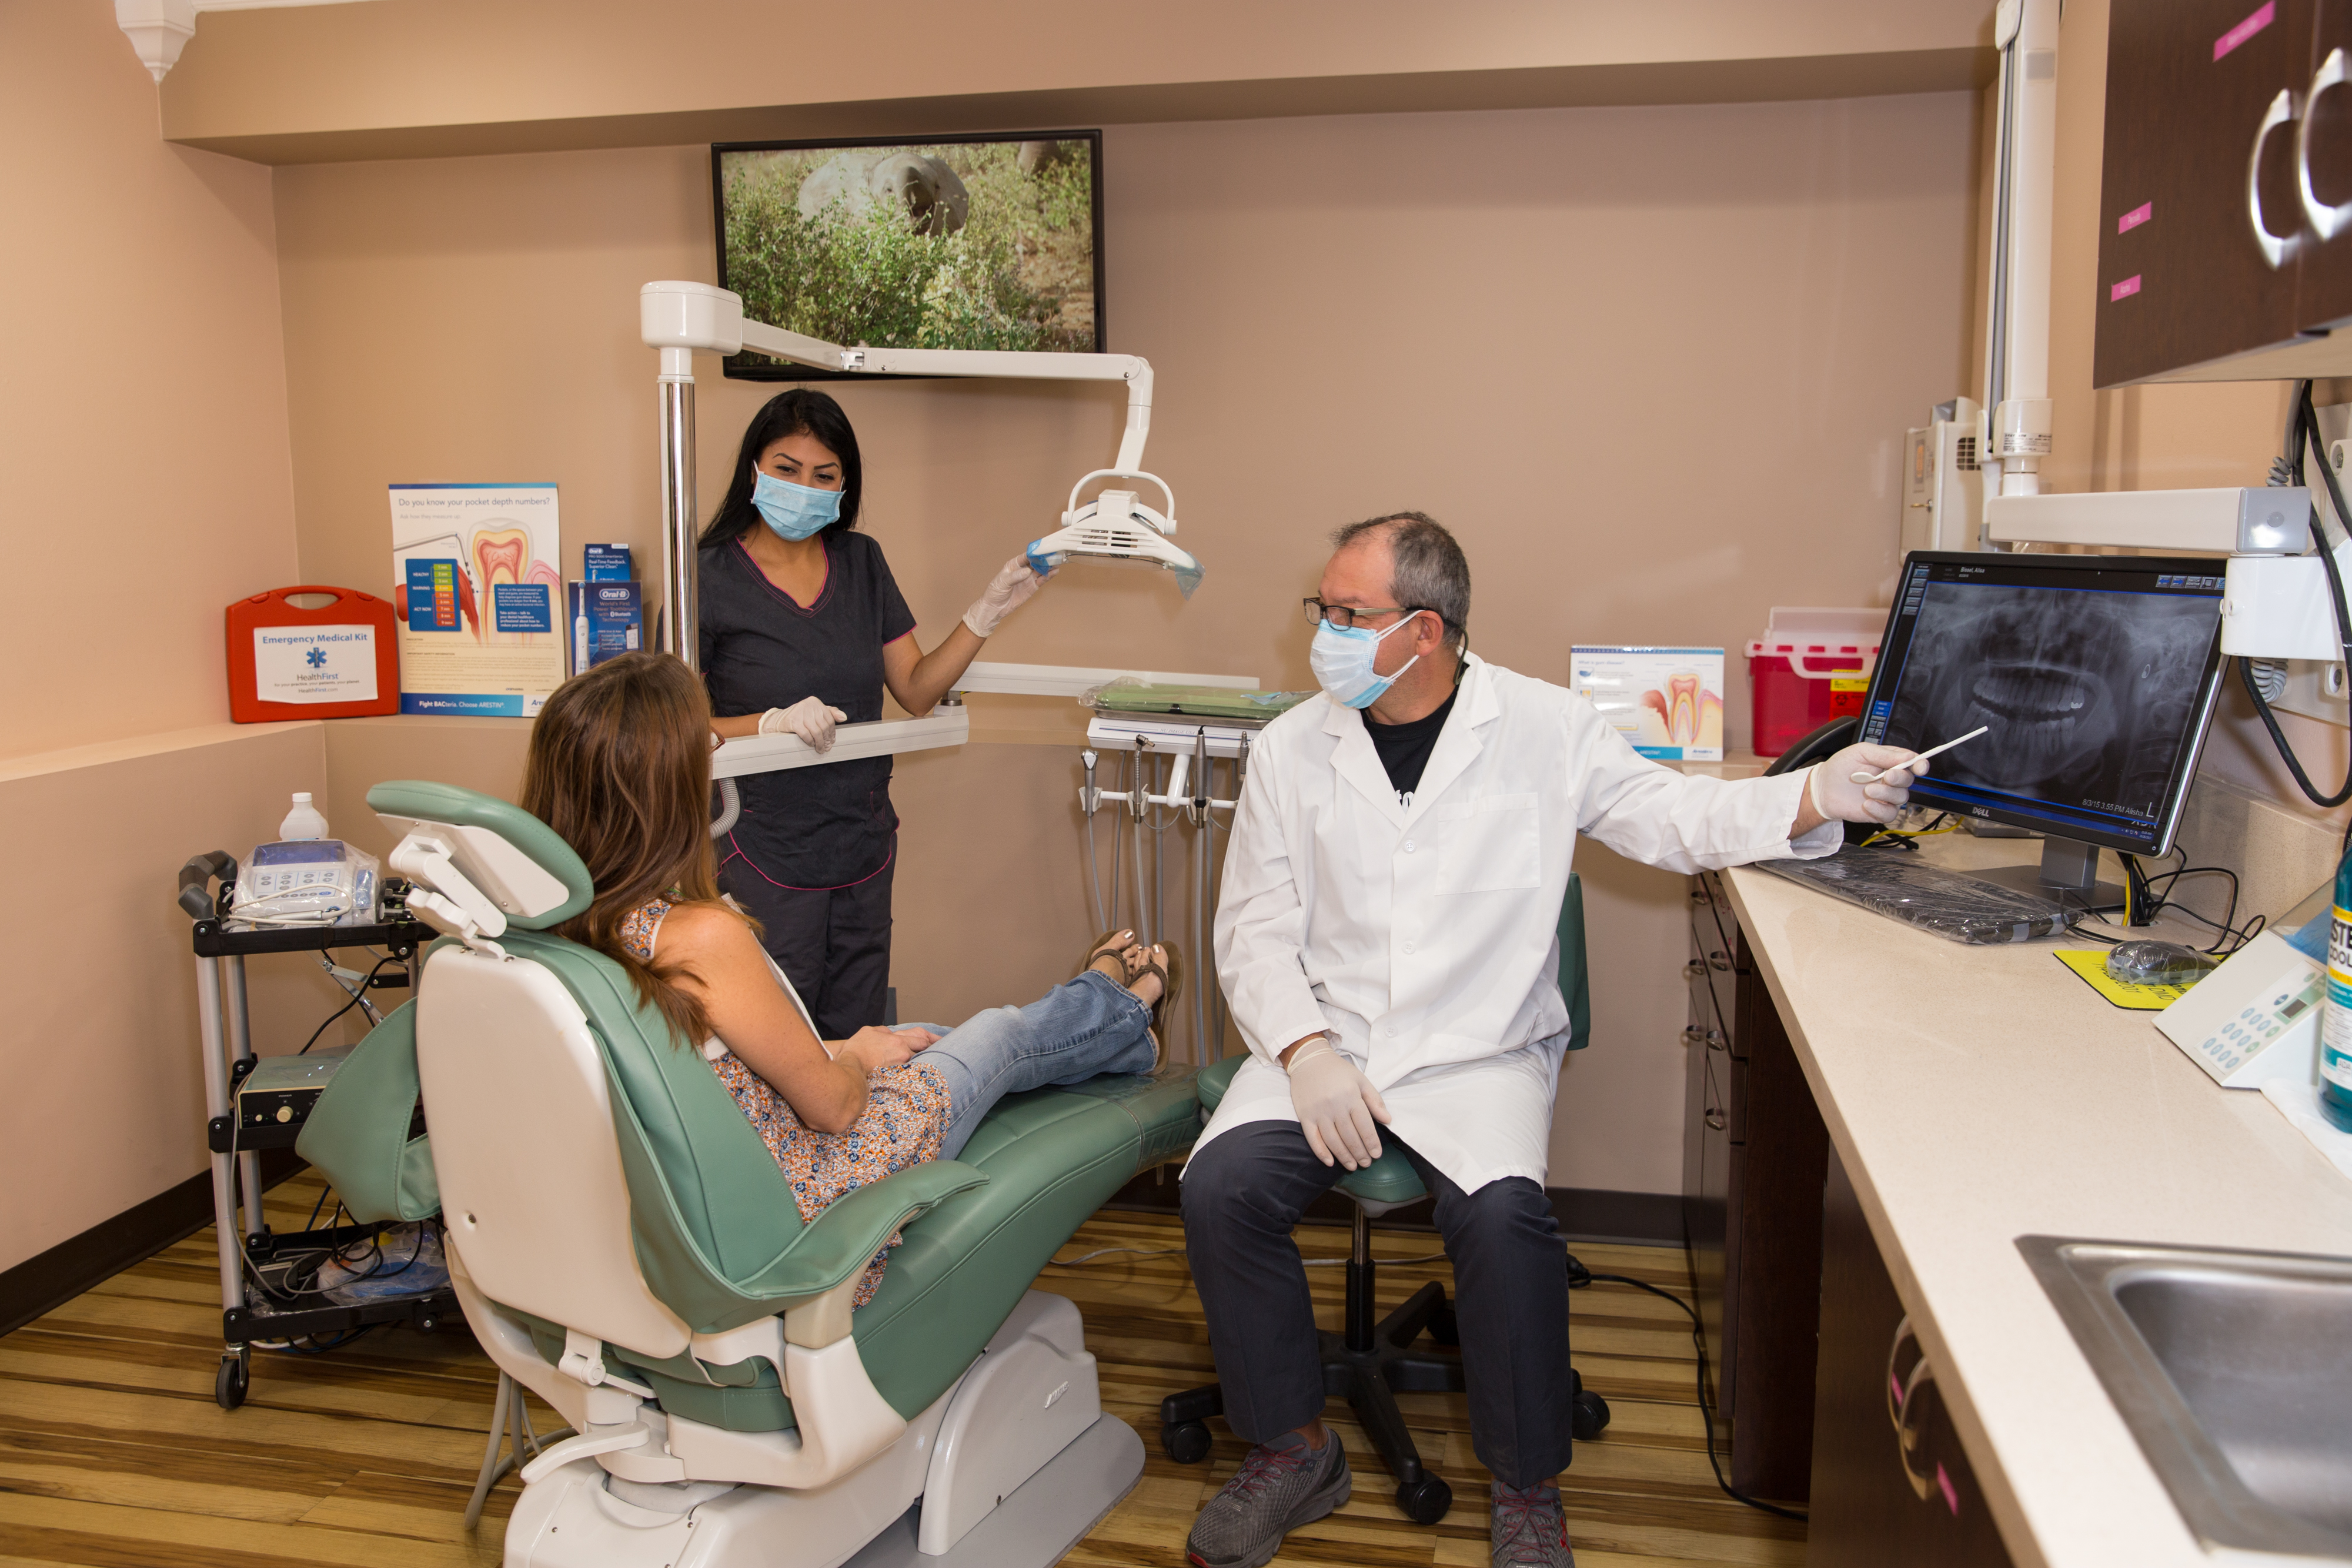 OrthoGrace Dental - Dentist in Northridge, CA - 91324 - 818-280-5596